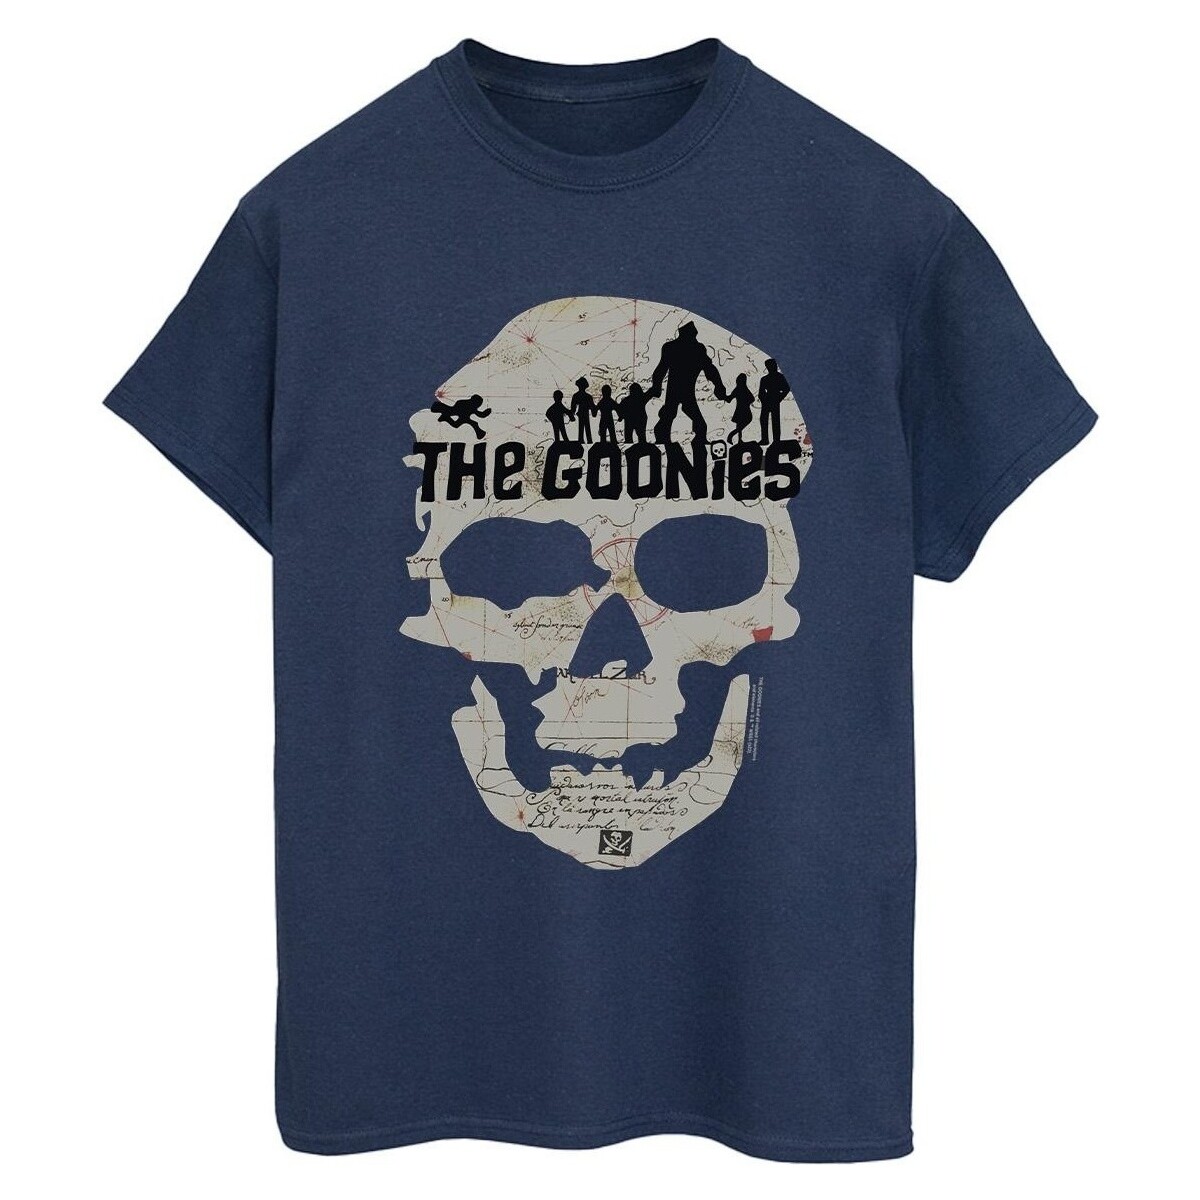 textil Mujer Camisetas manga larga Goonies Map Skull Azul